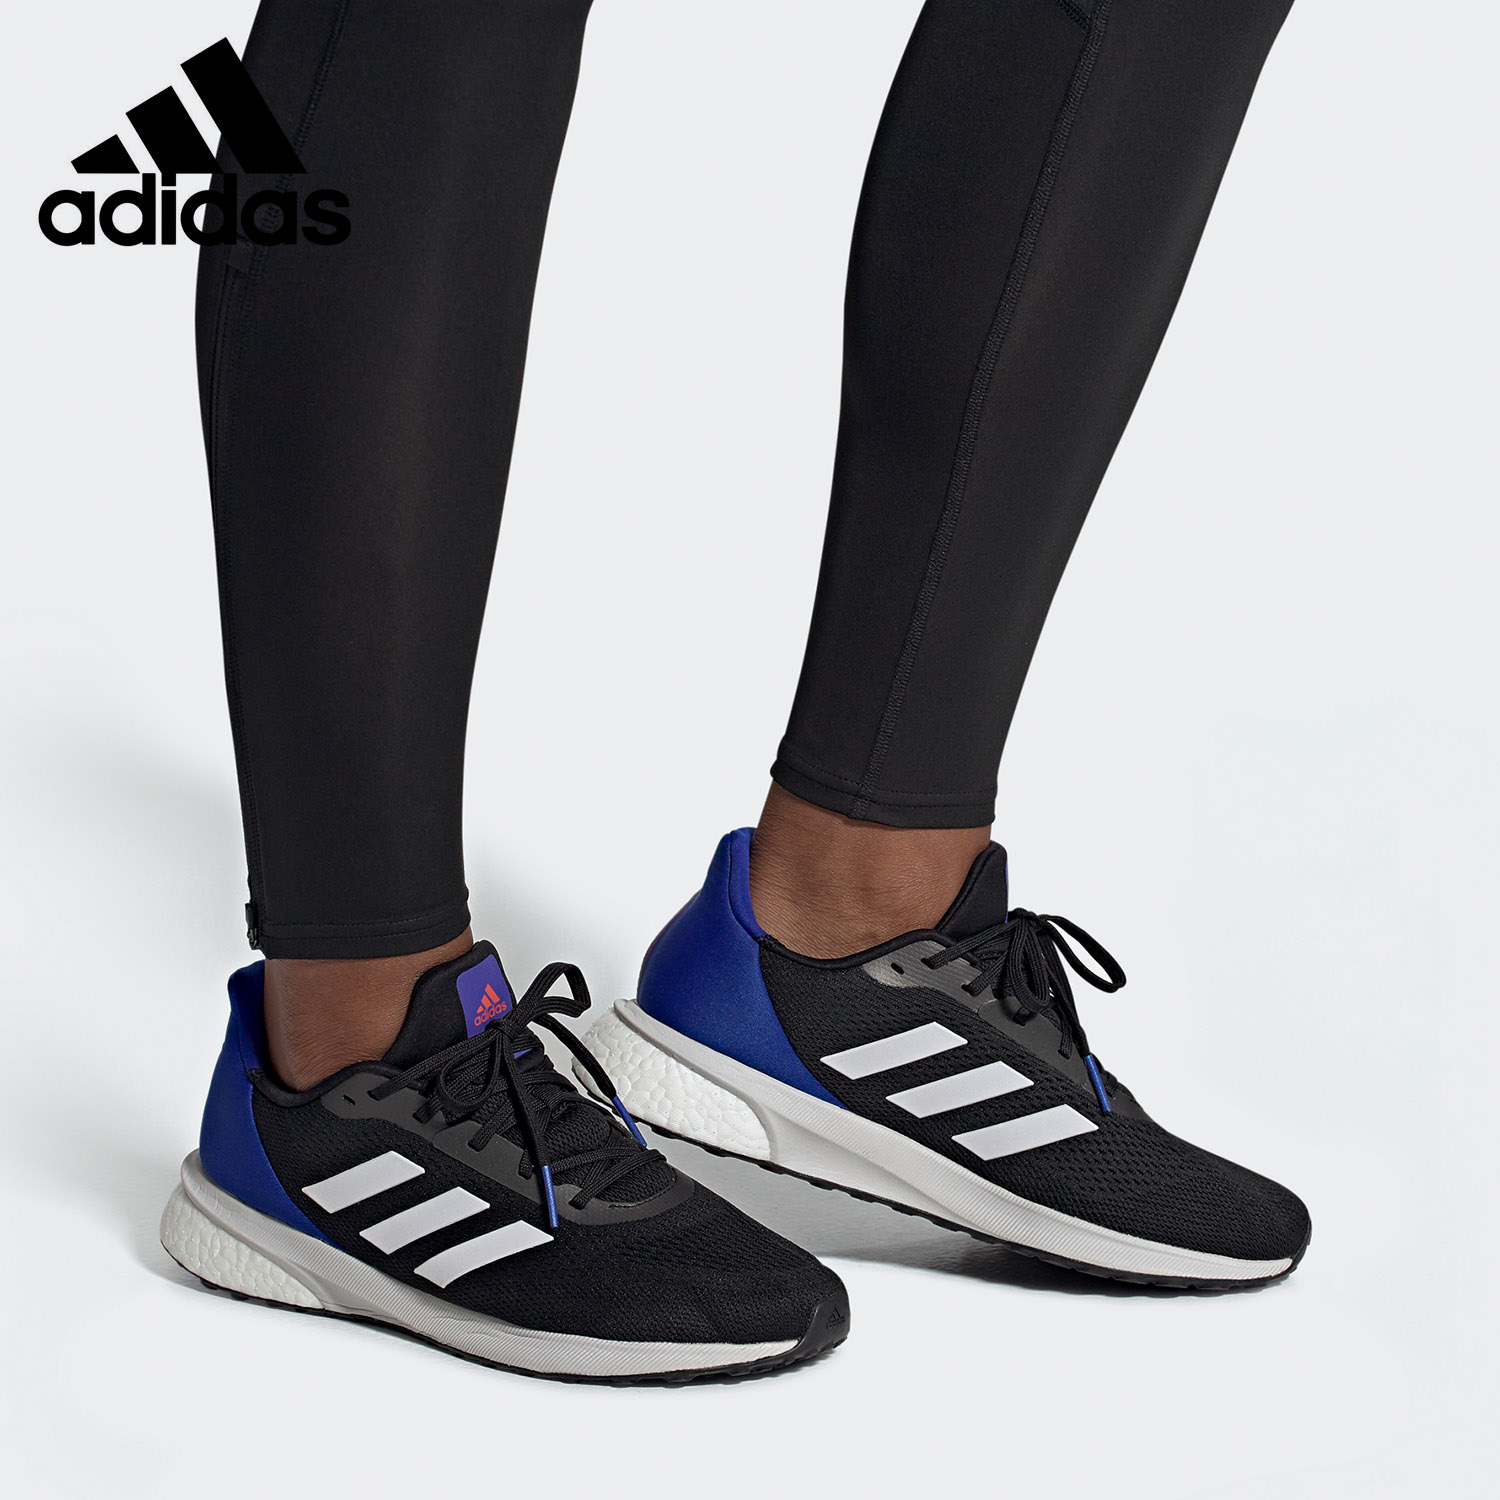 Adidas/阿迪达斯正品2020新款ASTRARUN M 男子跑步运动鞋EH1531 运动鞋new 跑步鞋 原图主图